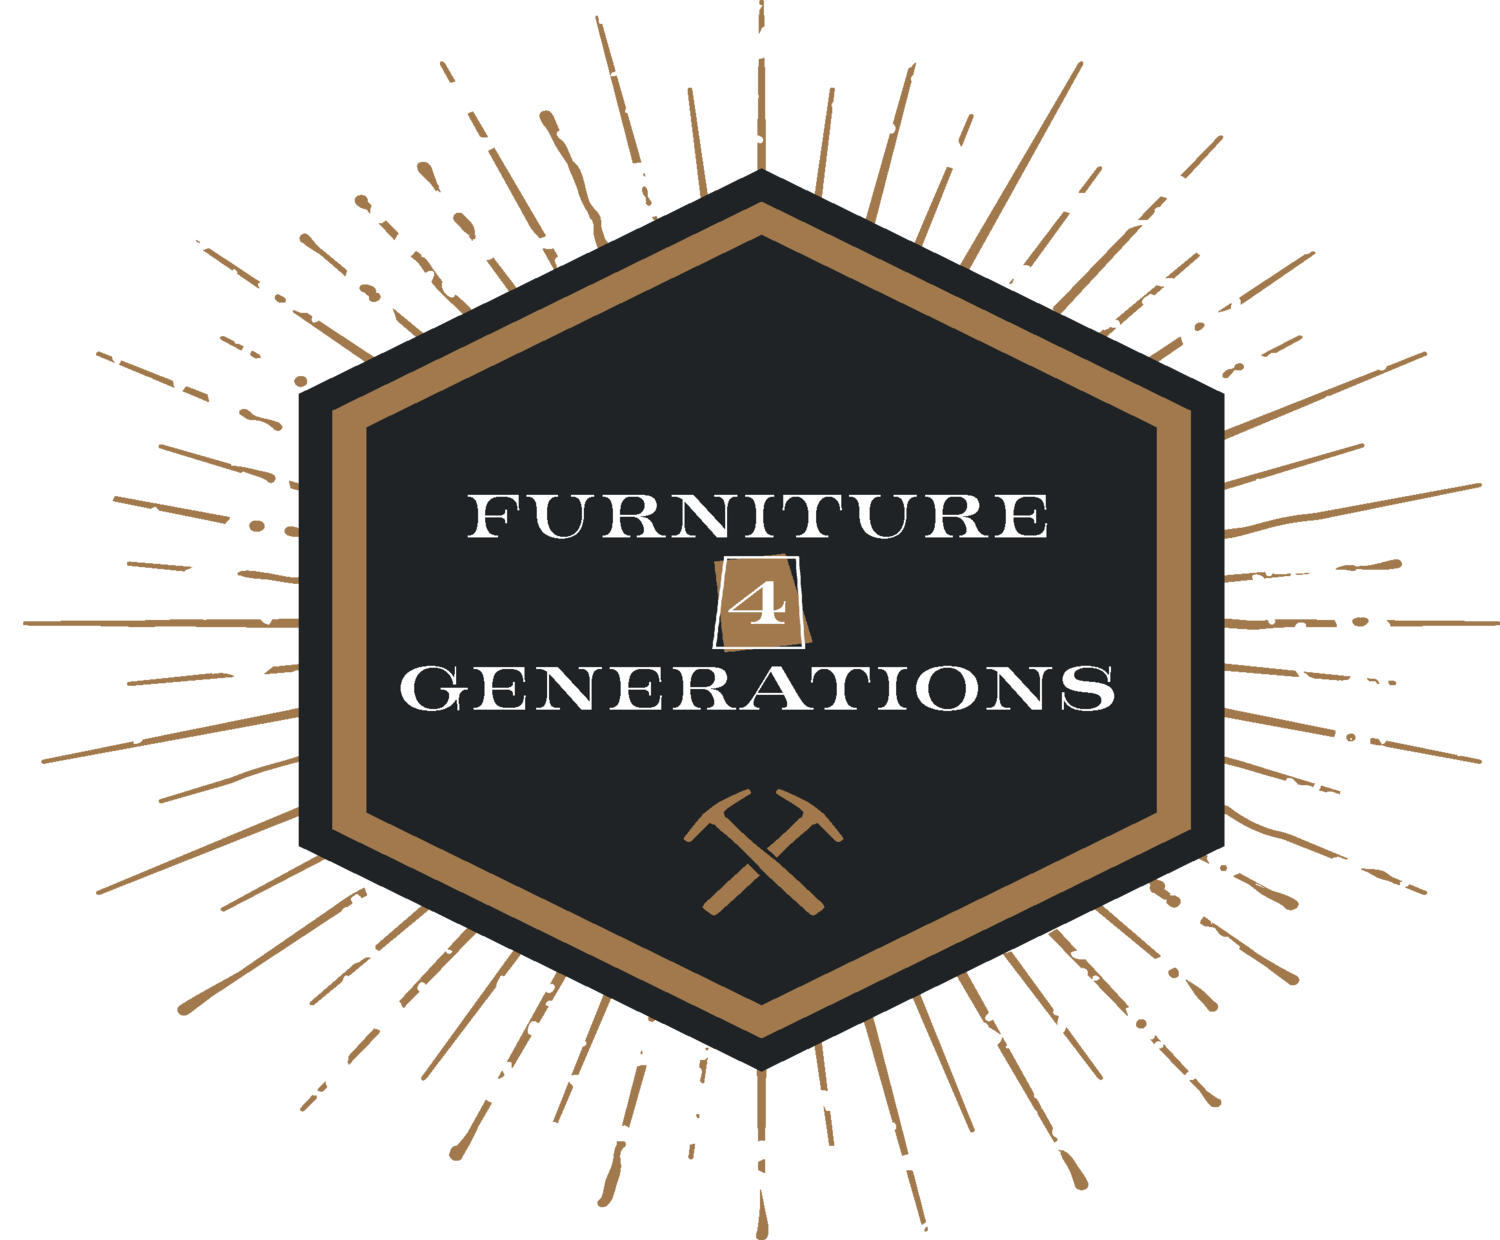 Furniture 4 Generations